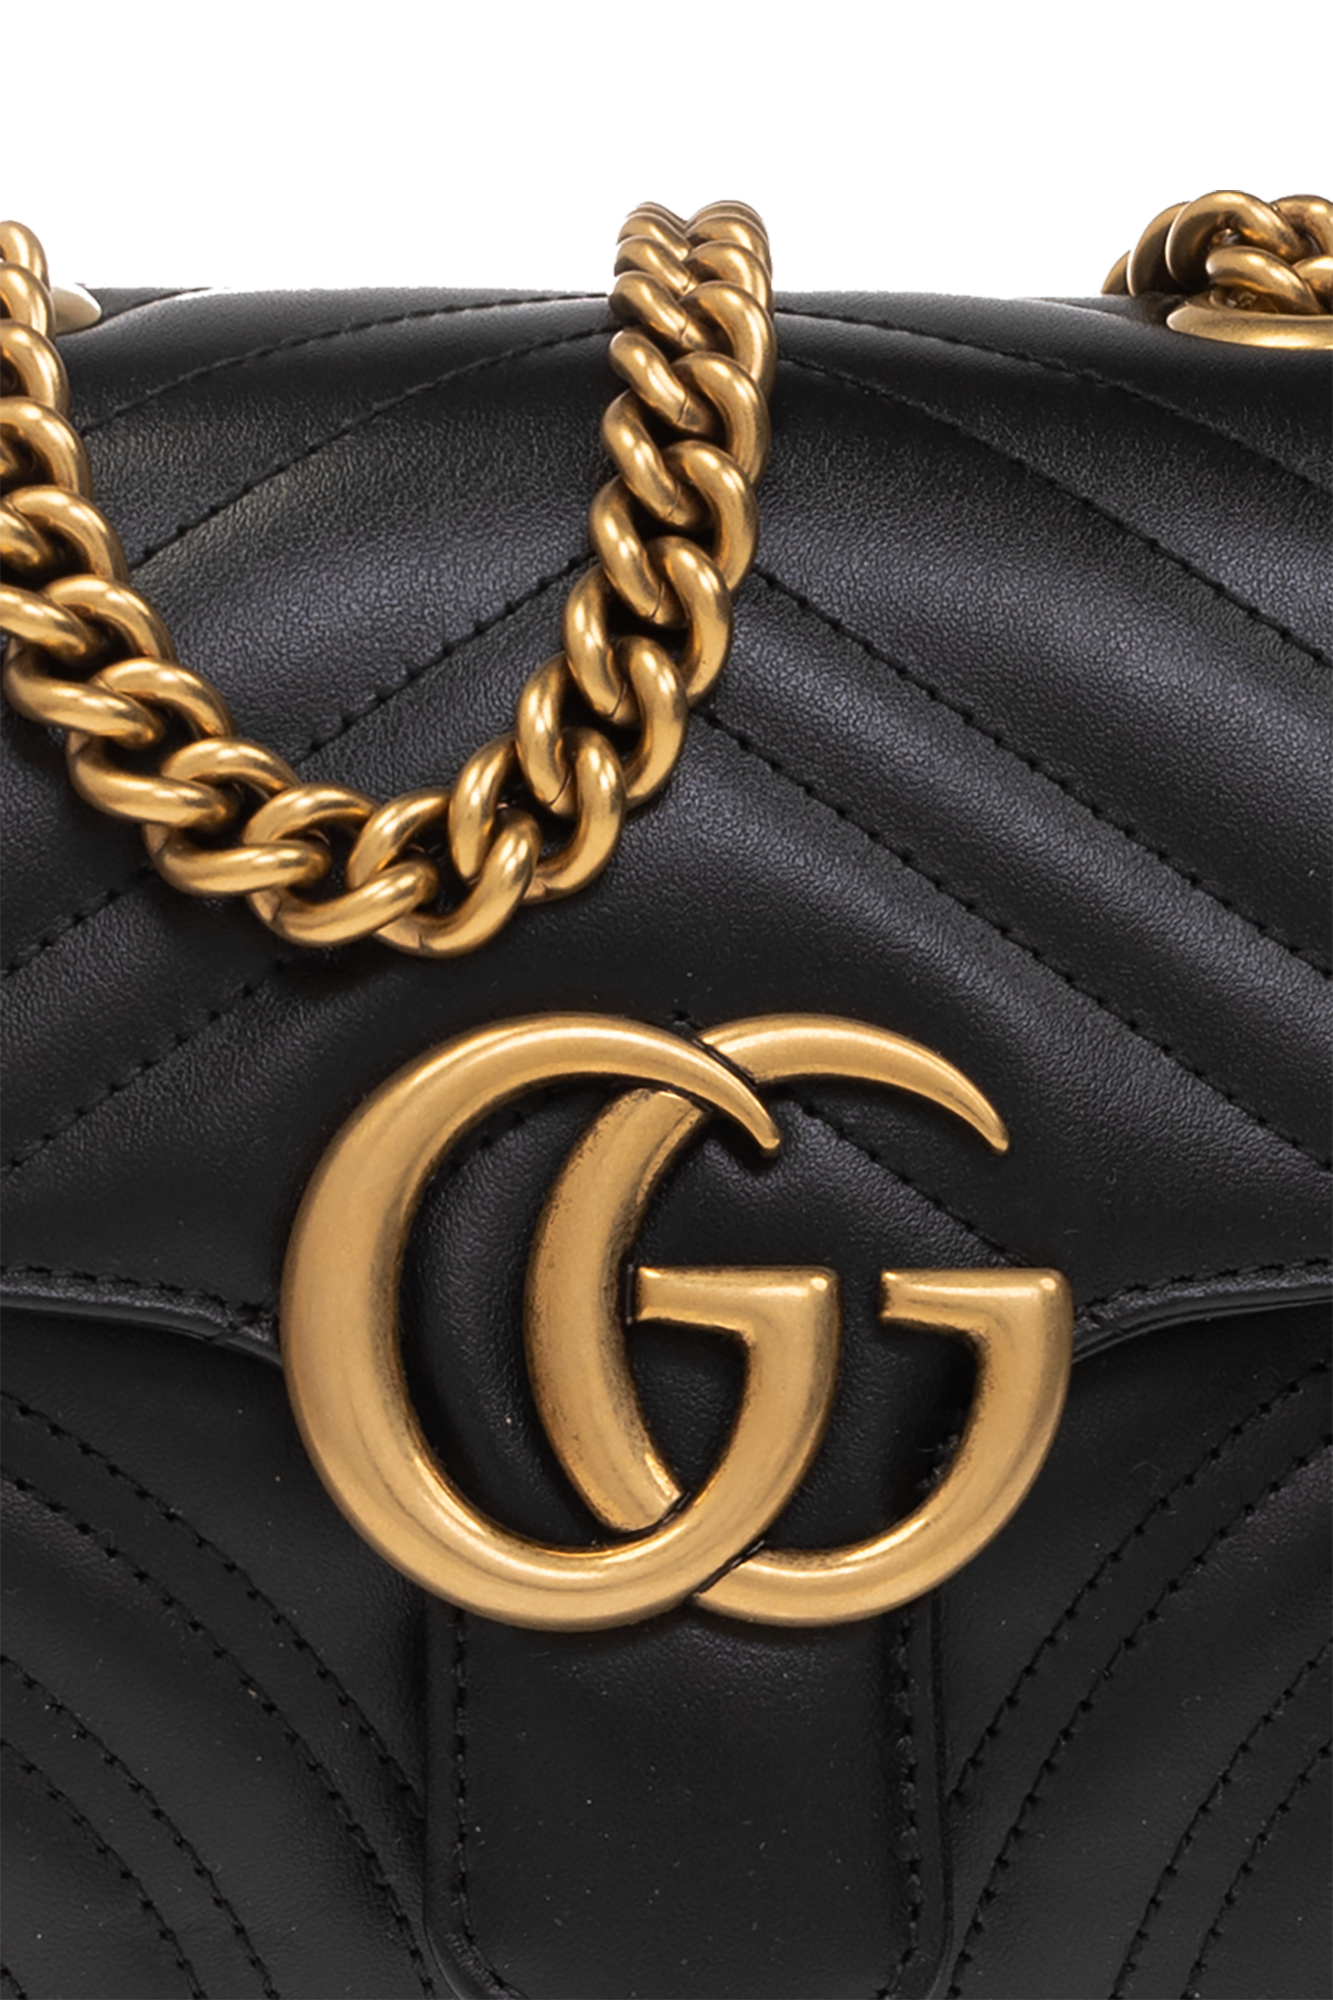 Gucci Marmont Size Comparison: - Branded Lifestyle Shopper